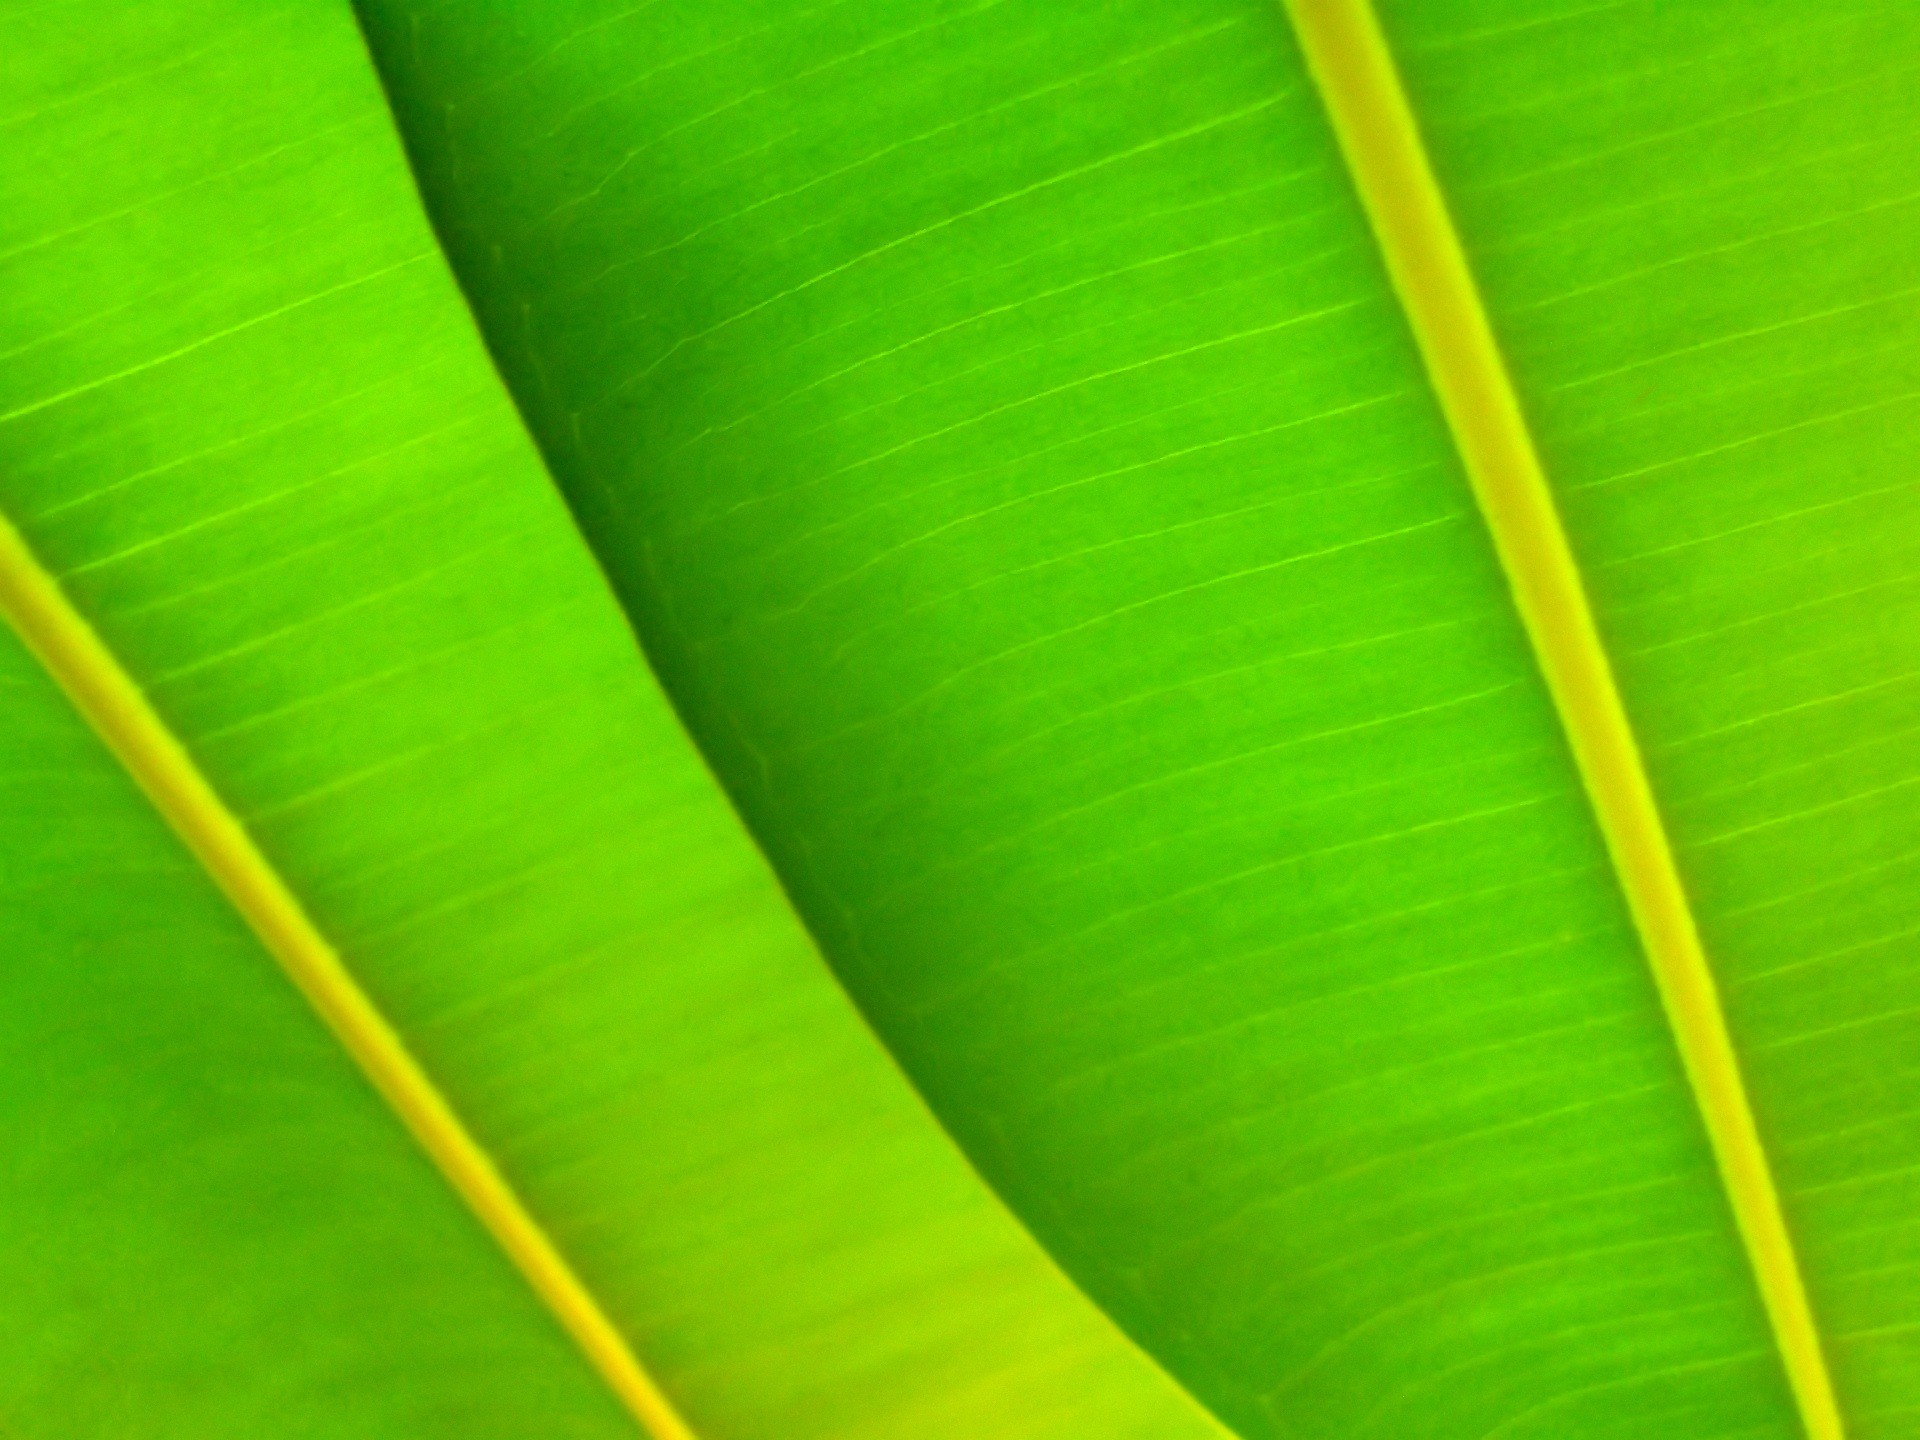 1920x1440 Green leafs Wallpaper Plants Nature